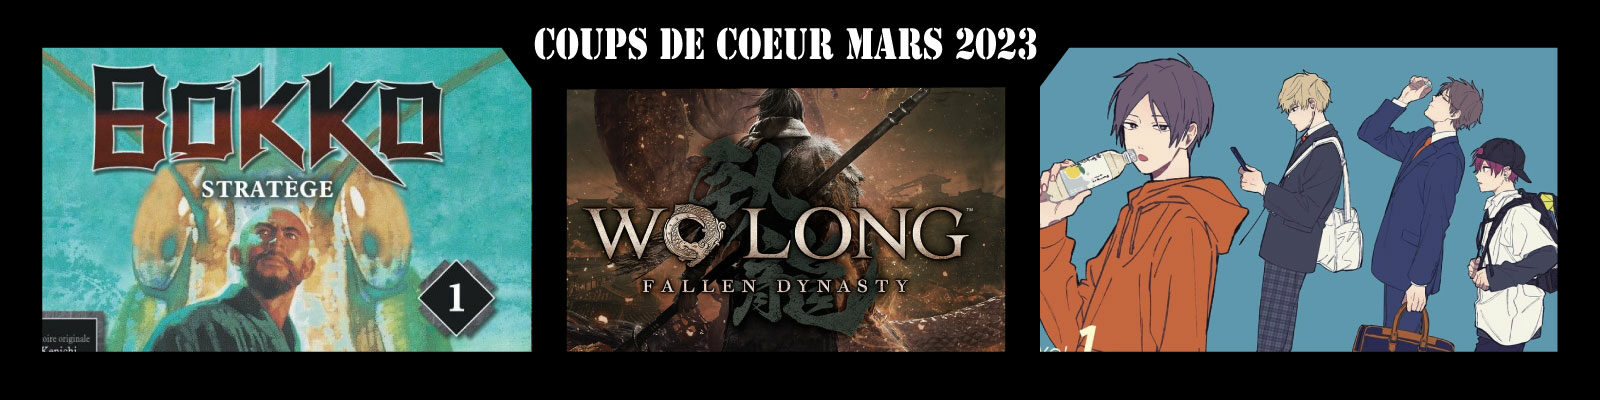 Coups-de-coeur-mars 2023